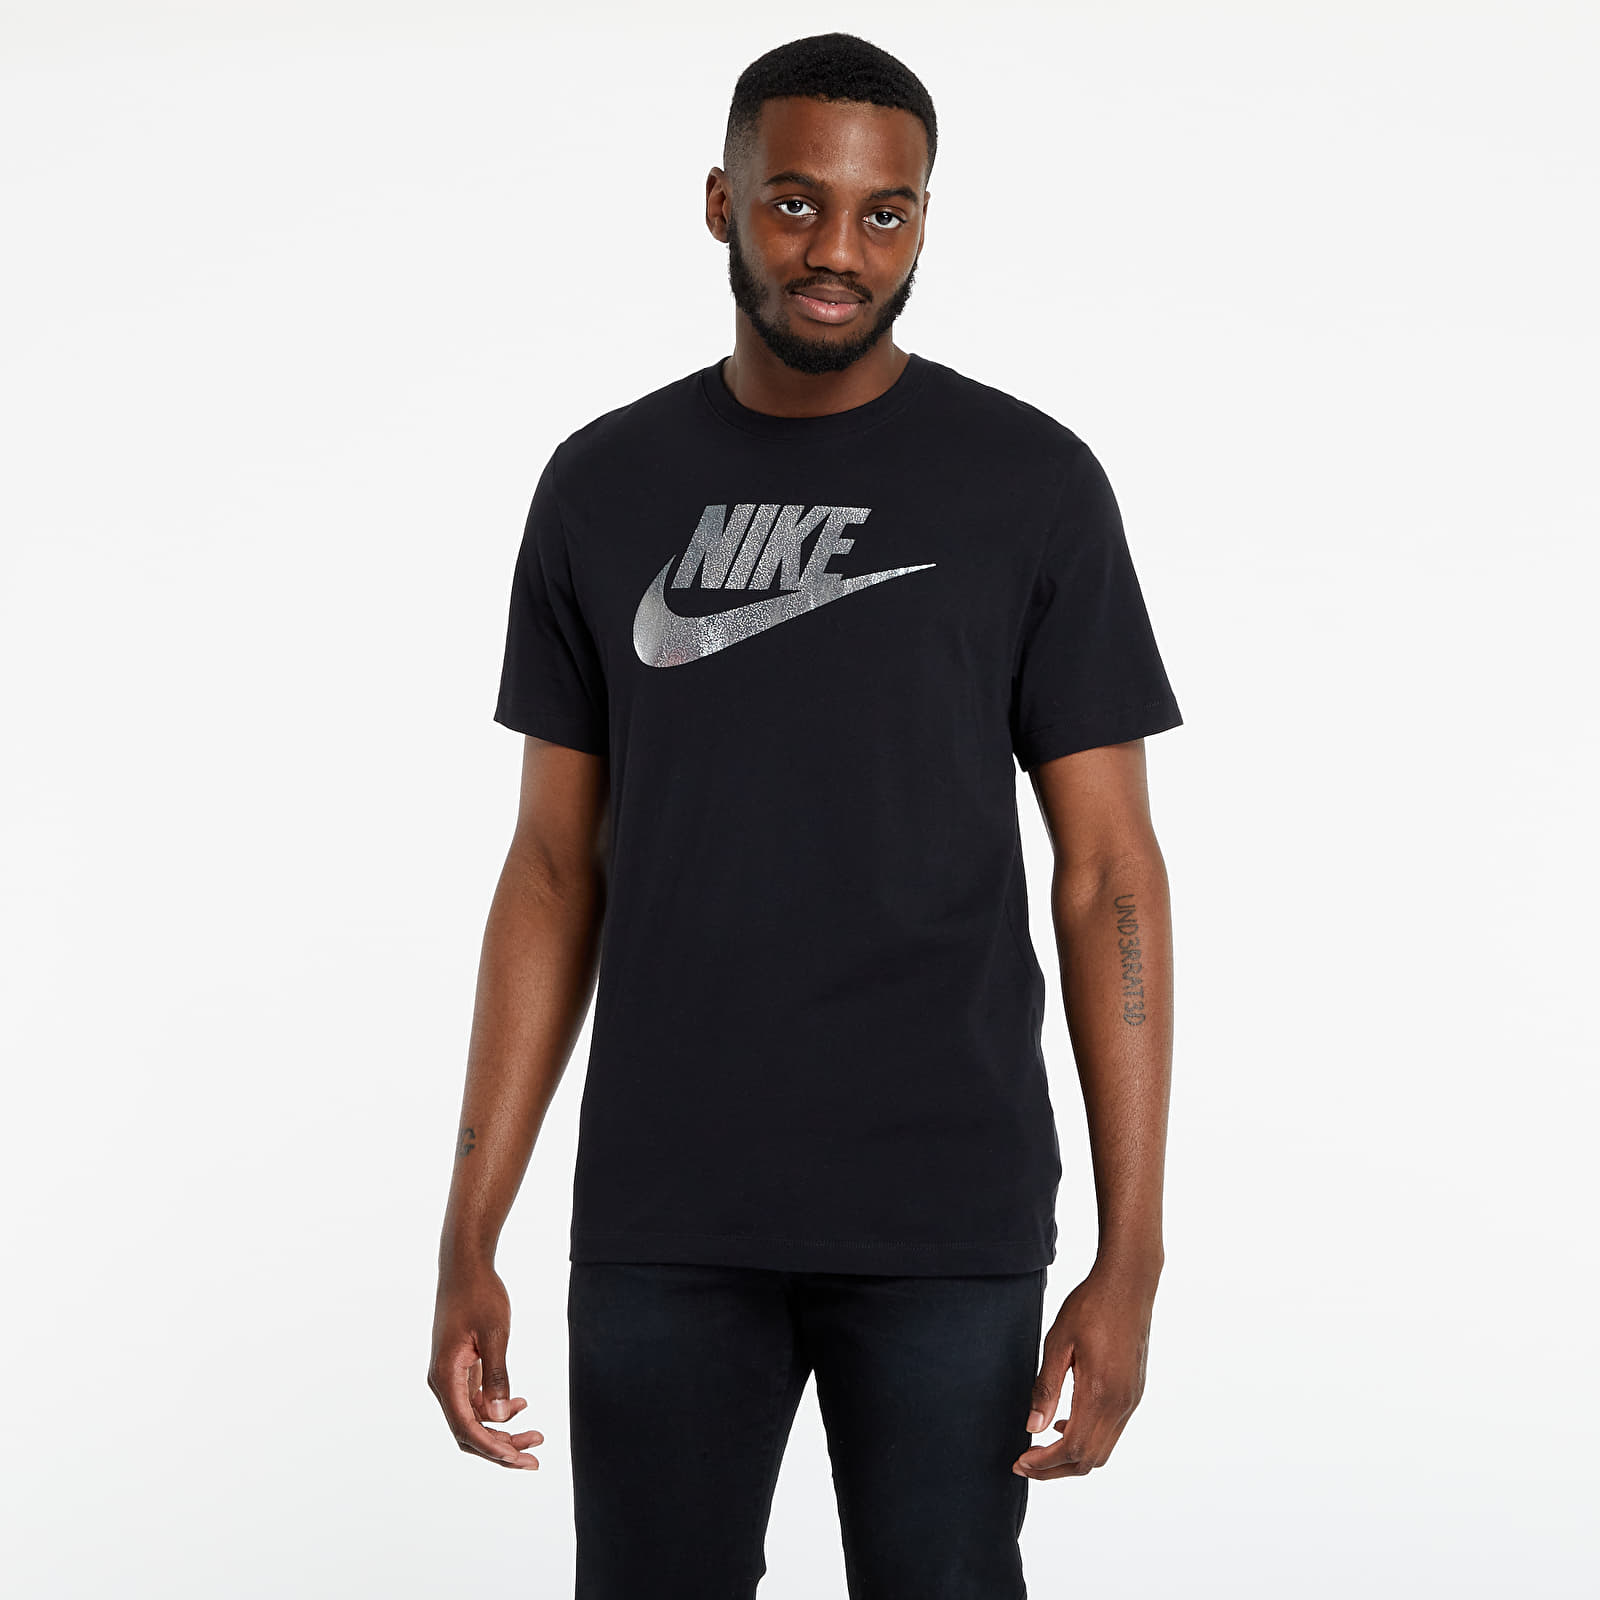 Тениски Nike Sportswear Tee Brnd Mrk Aplctn 1 Black